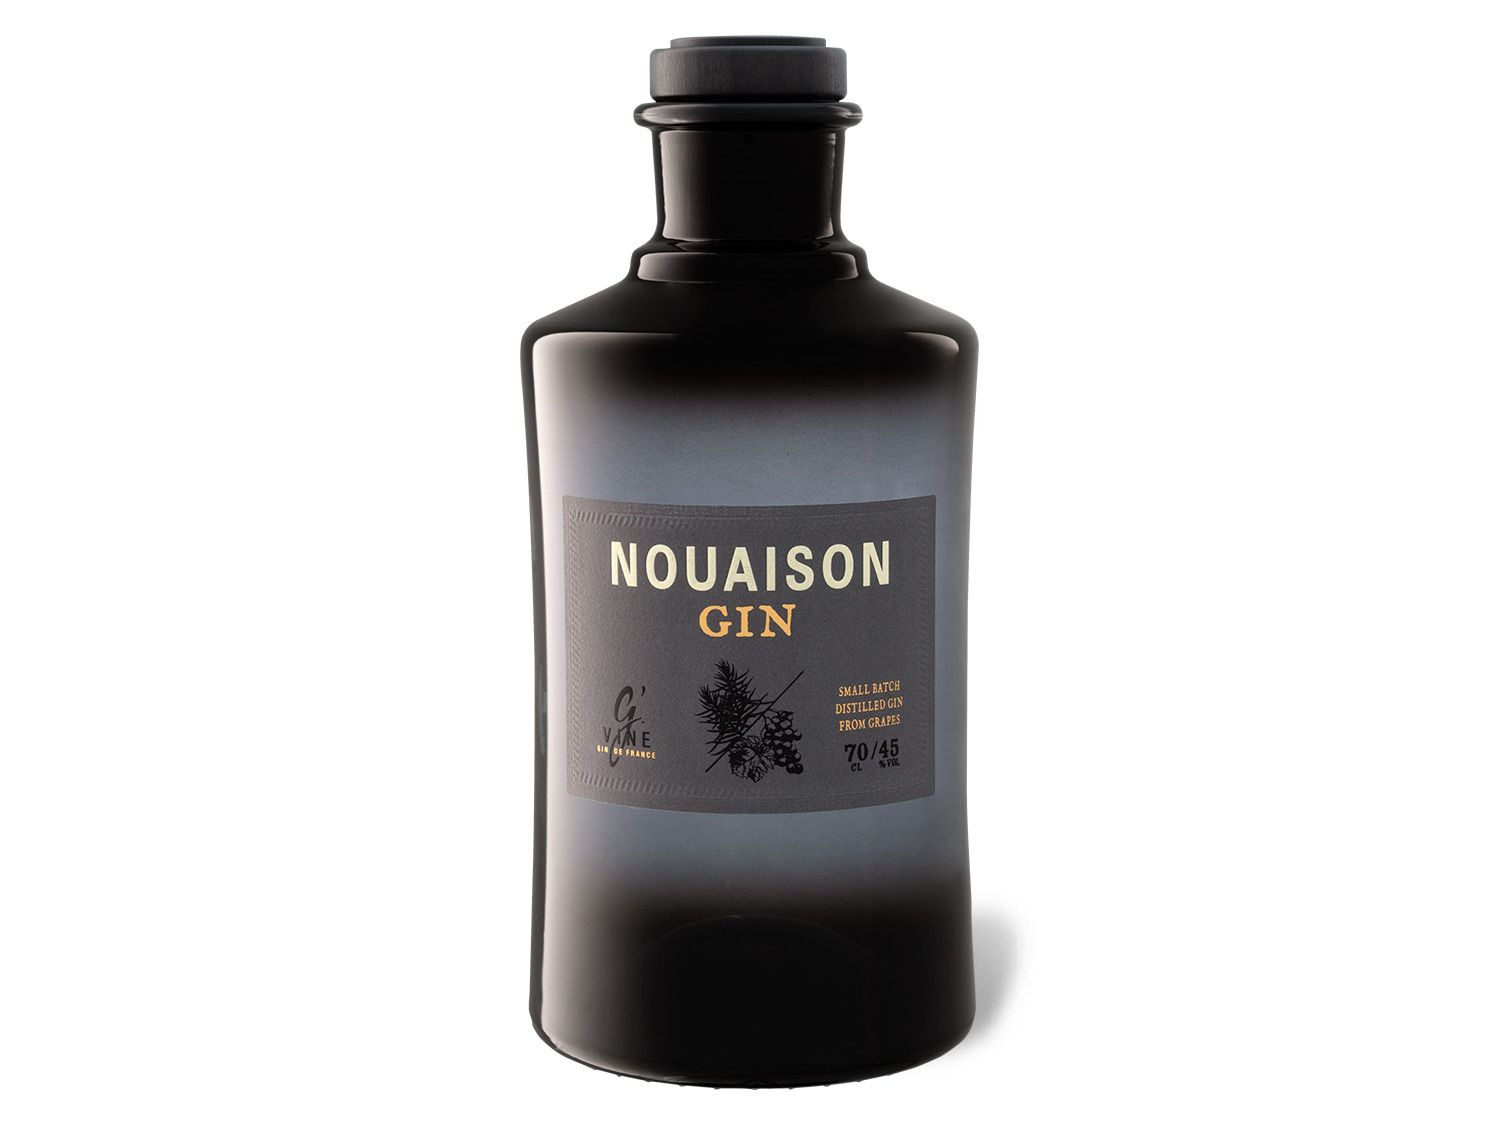 Nouaison Gin by G'Vine 45% Vol online kaufen | LIDL